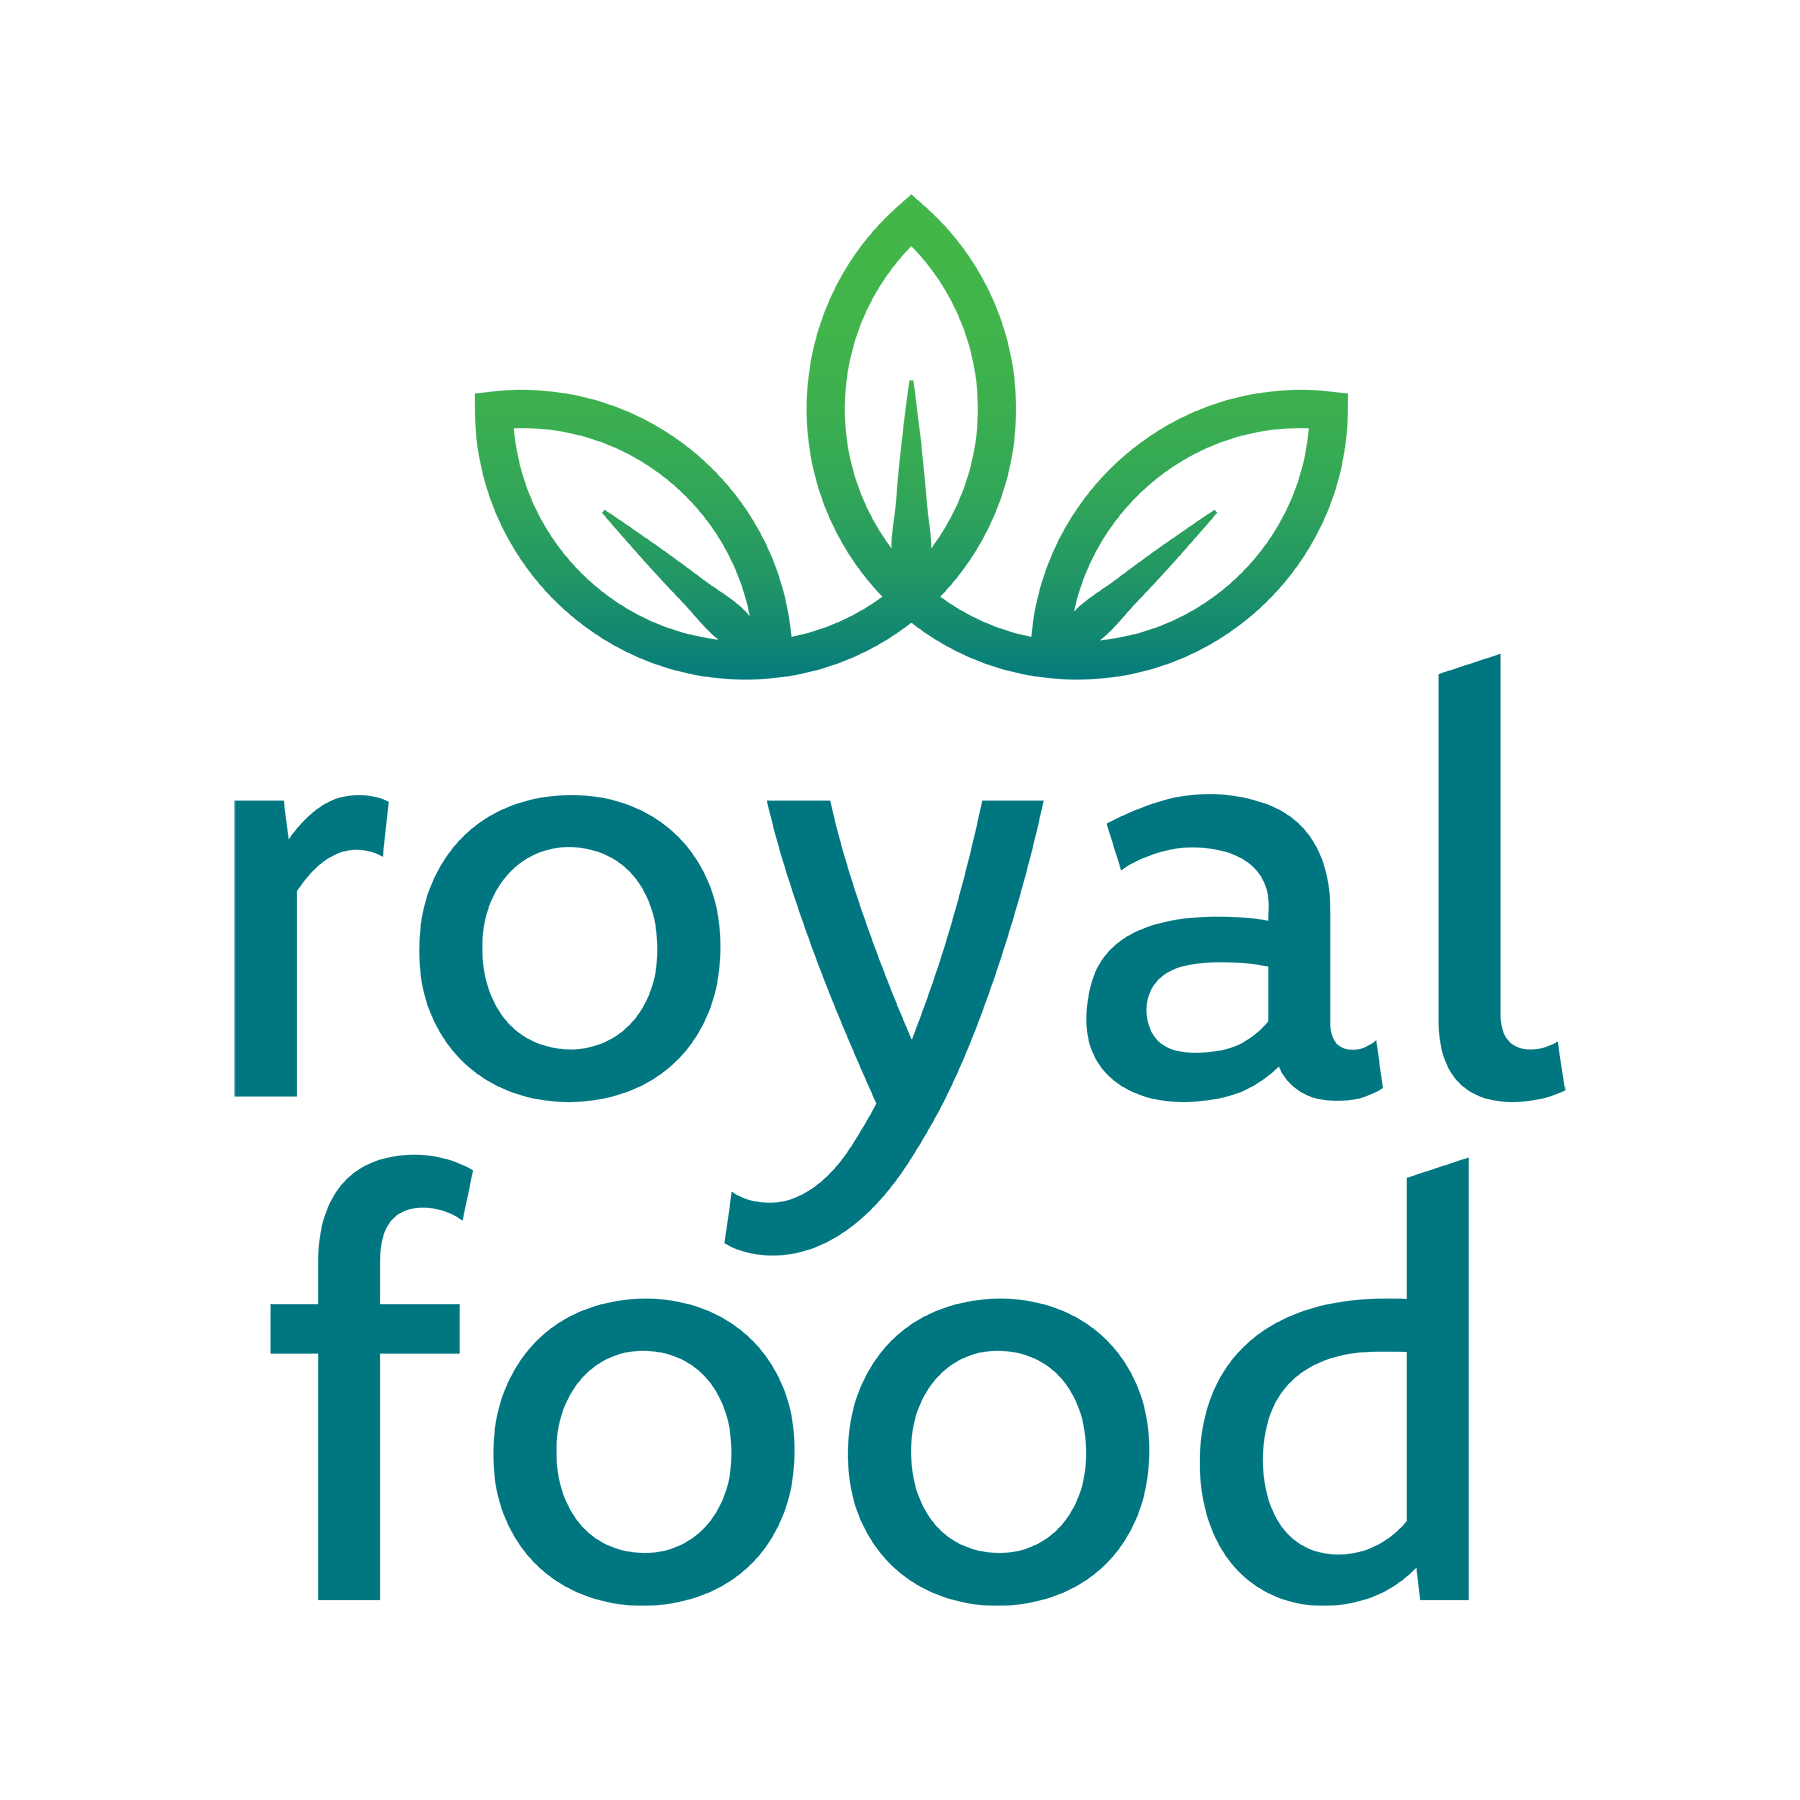 Blue Oval Food Logo - Creative Katz / Royal Food